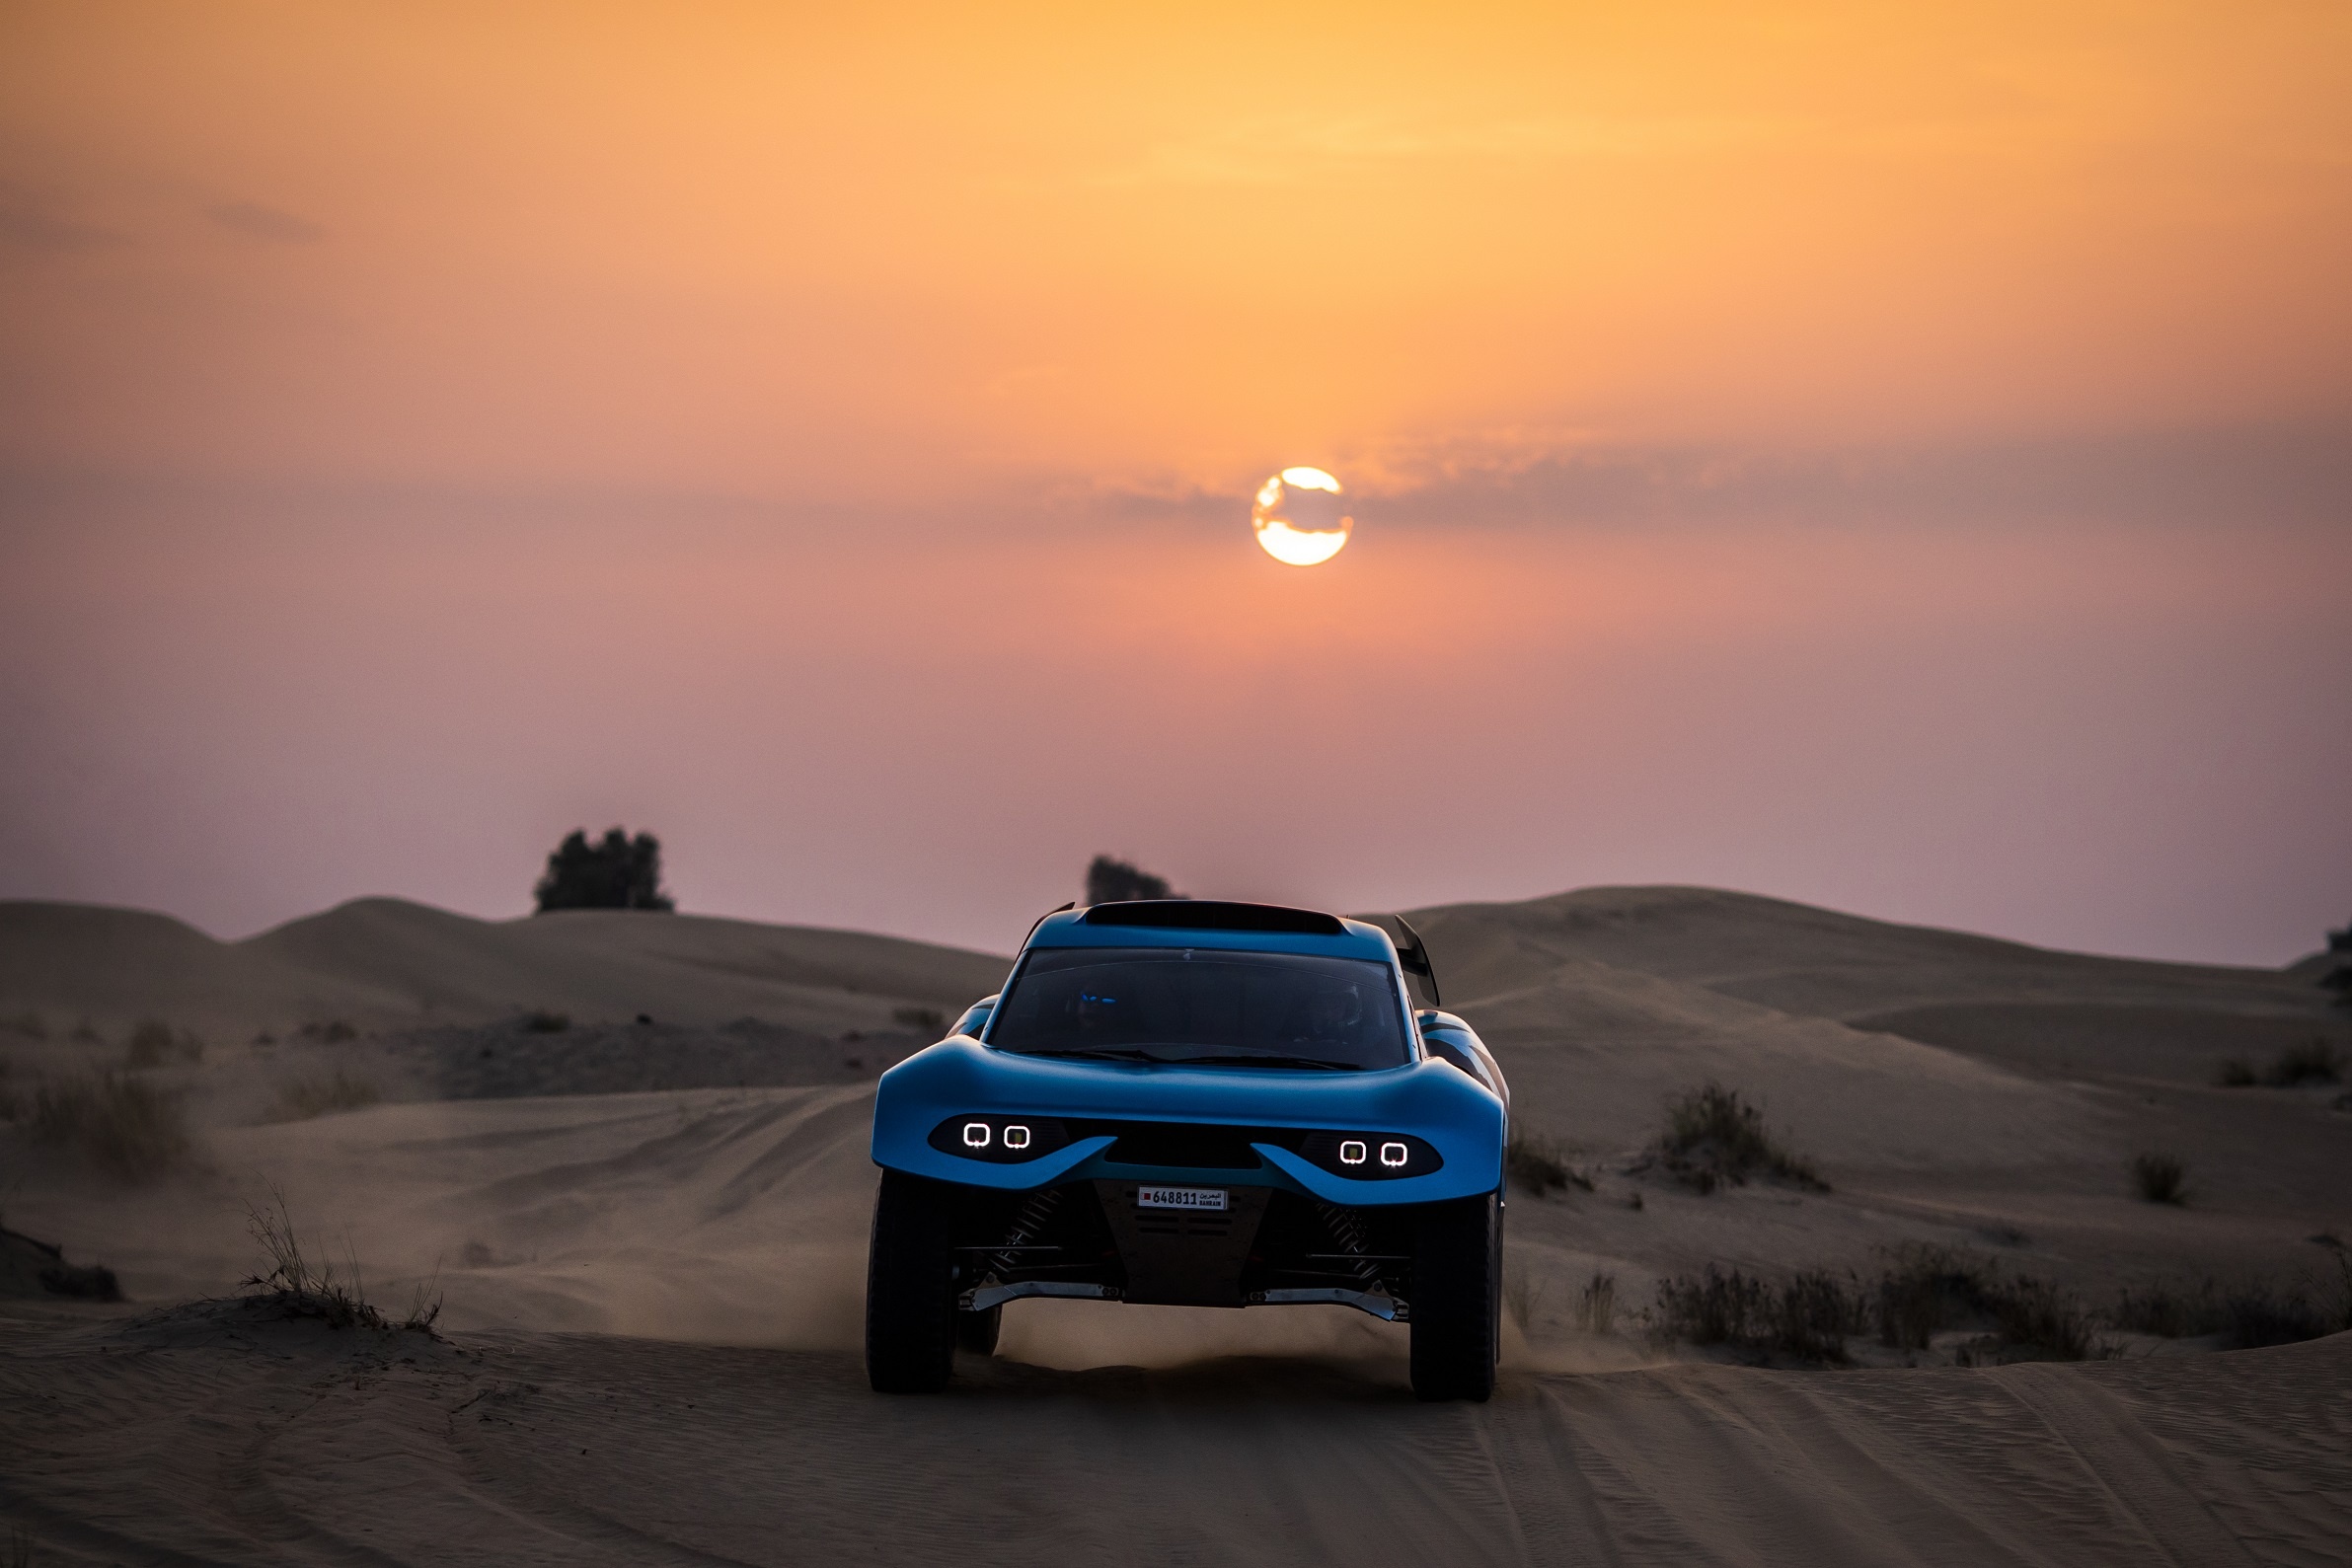 World’s first all-terrain hypercar unveiled in Dubai